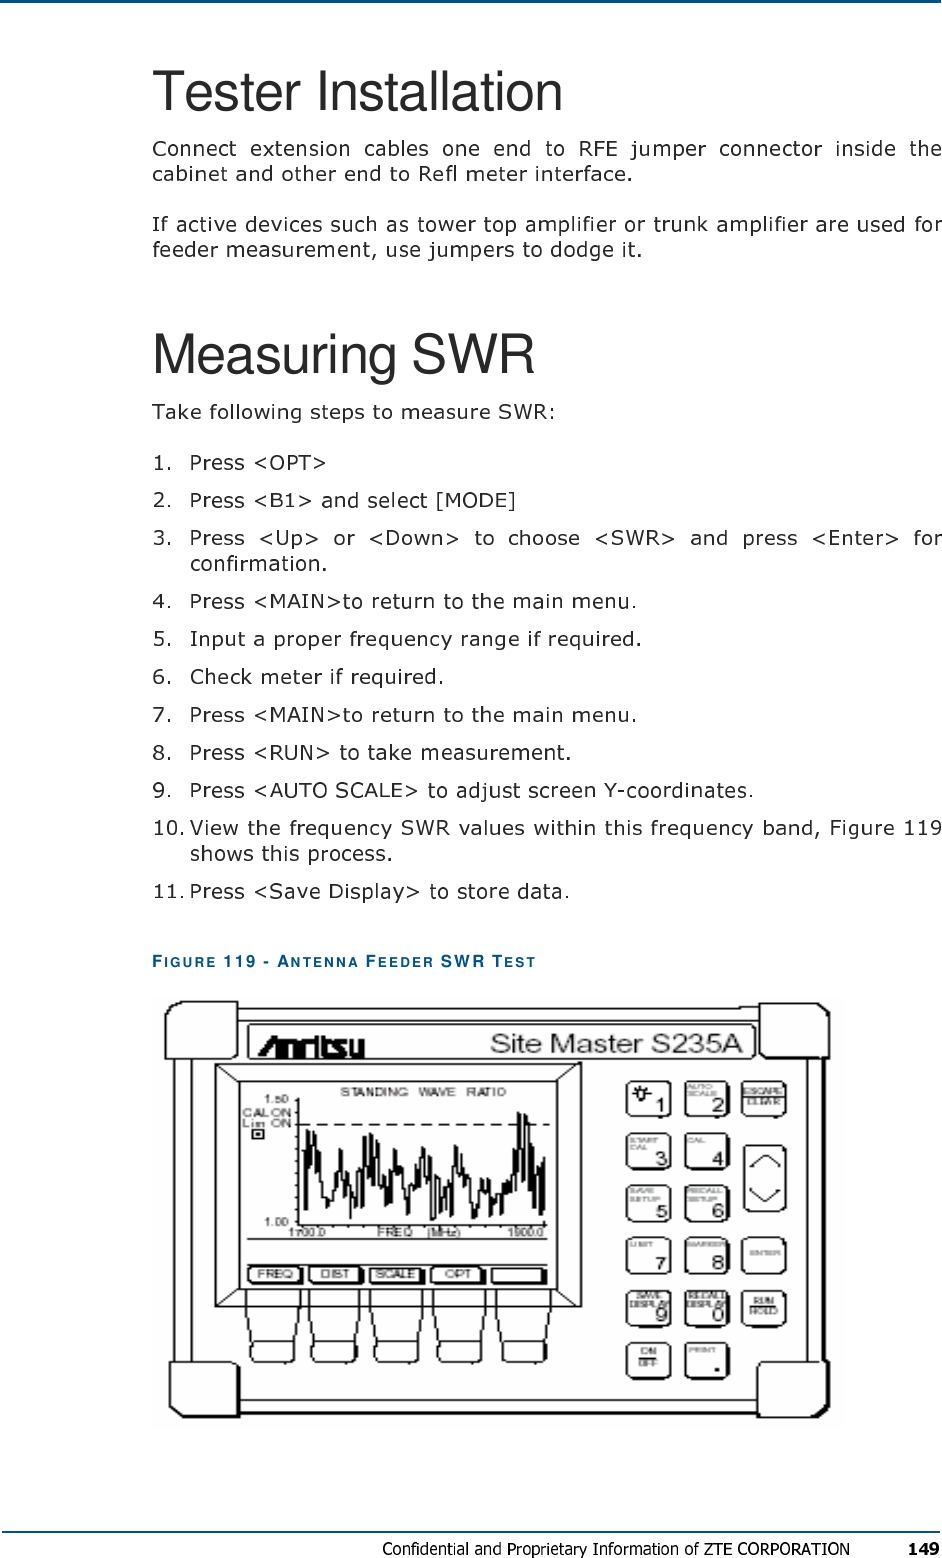 Tester Installation Measuring SWR            FIG U R E   119 - AN TEN N A FE E D ER  SWR TEST  